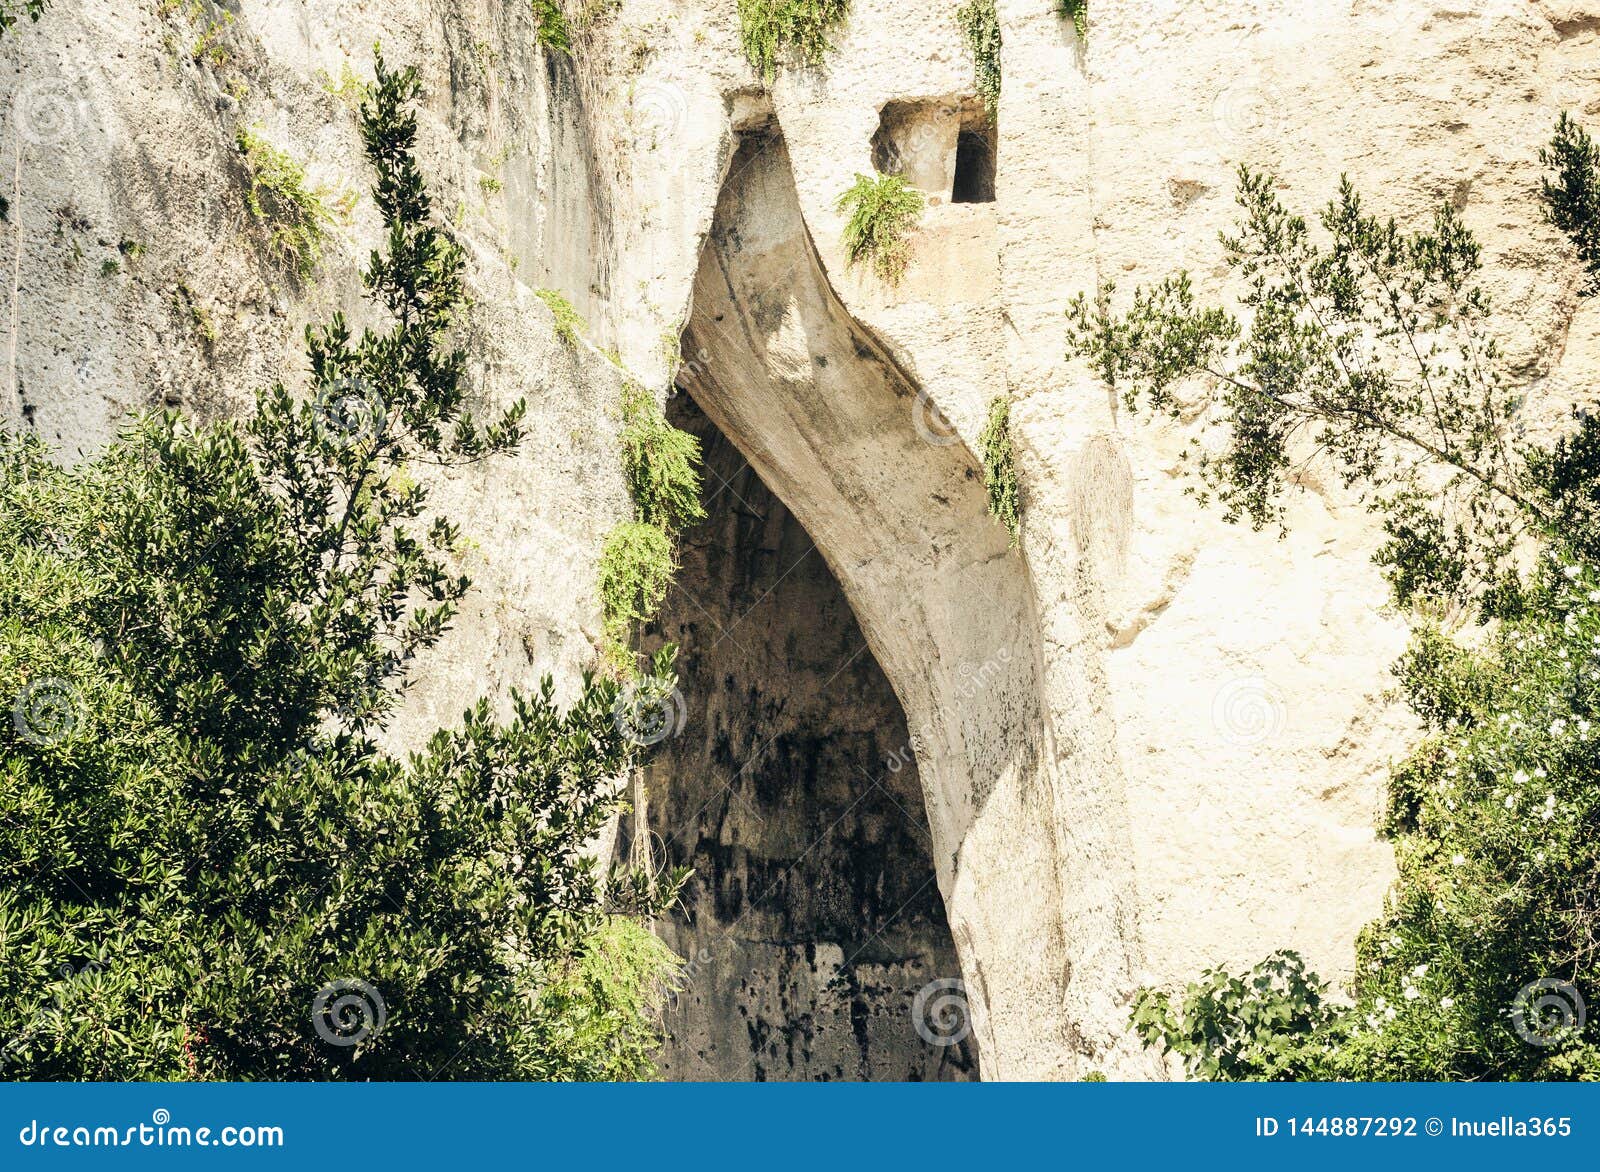 limestone cave ear of dionysius orecchio di dionisio with unusual acoustics Ã¢â¬â syracuse siracusa, sicily, italy